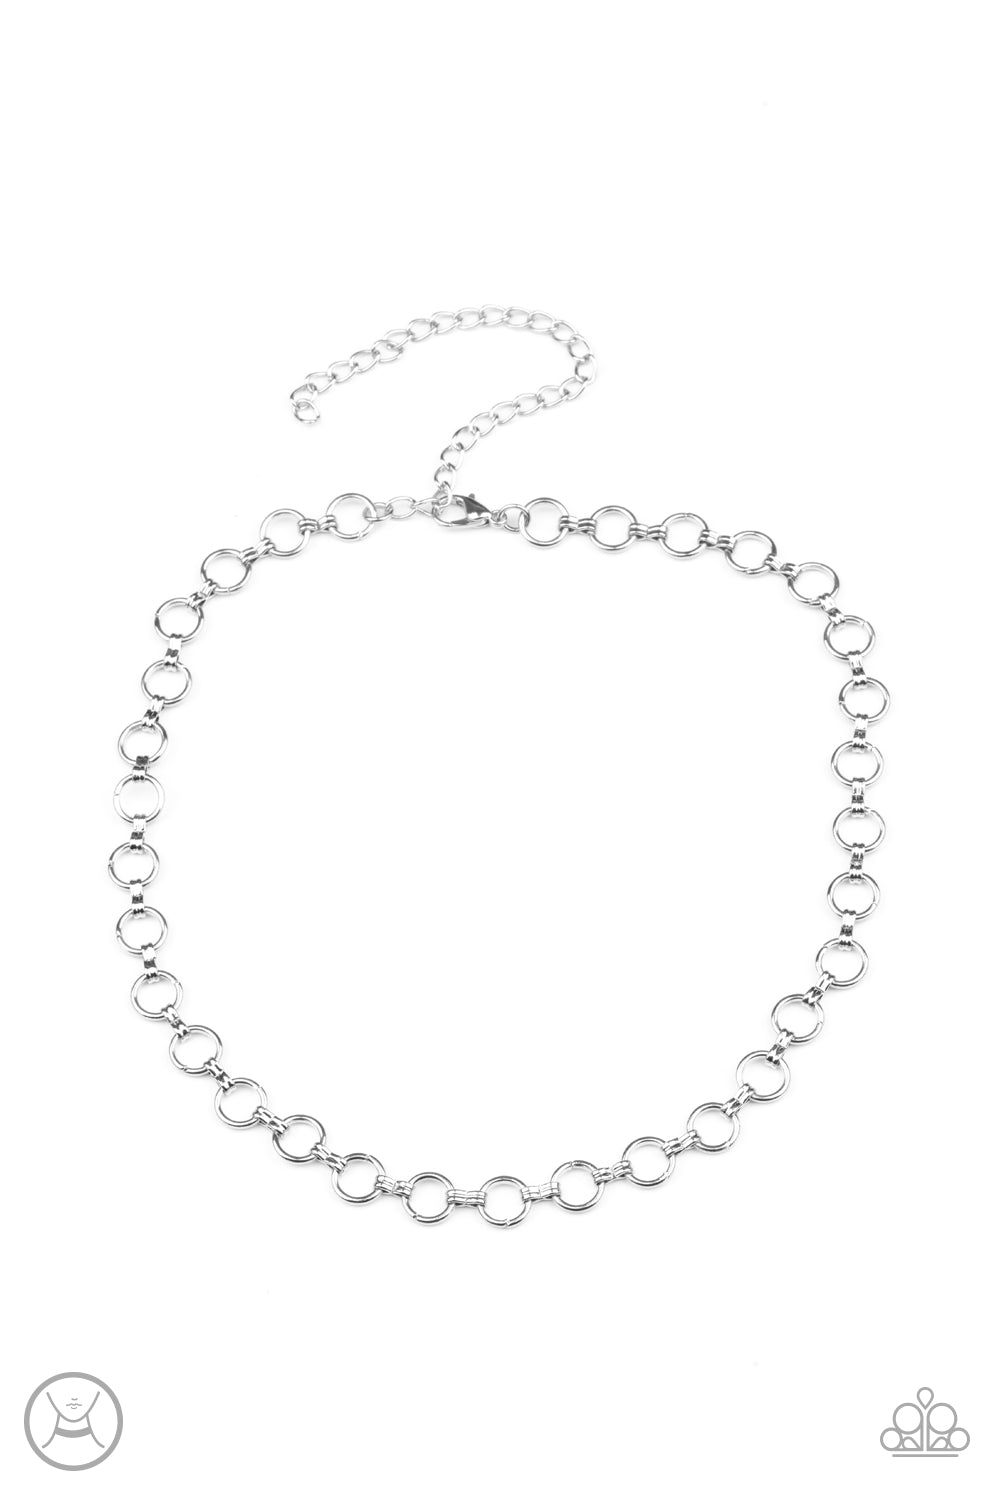 Paparazzi - Insta Connection - Silver Necklace